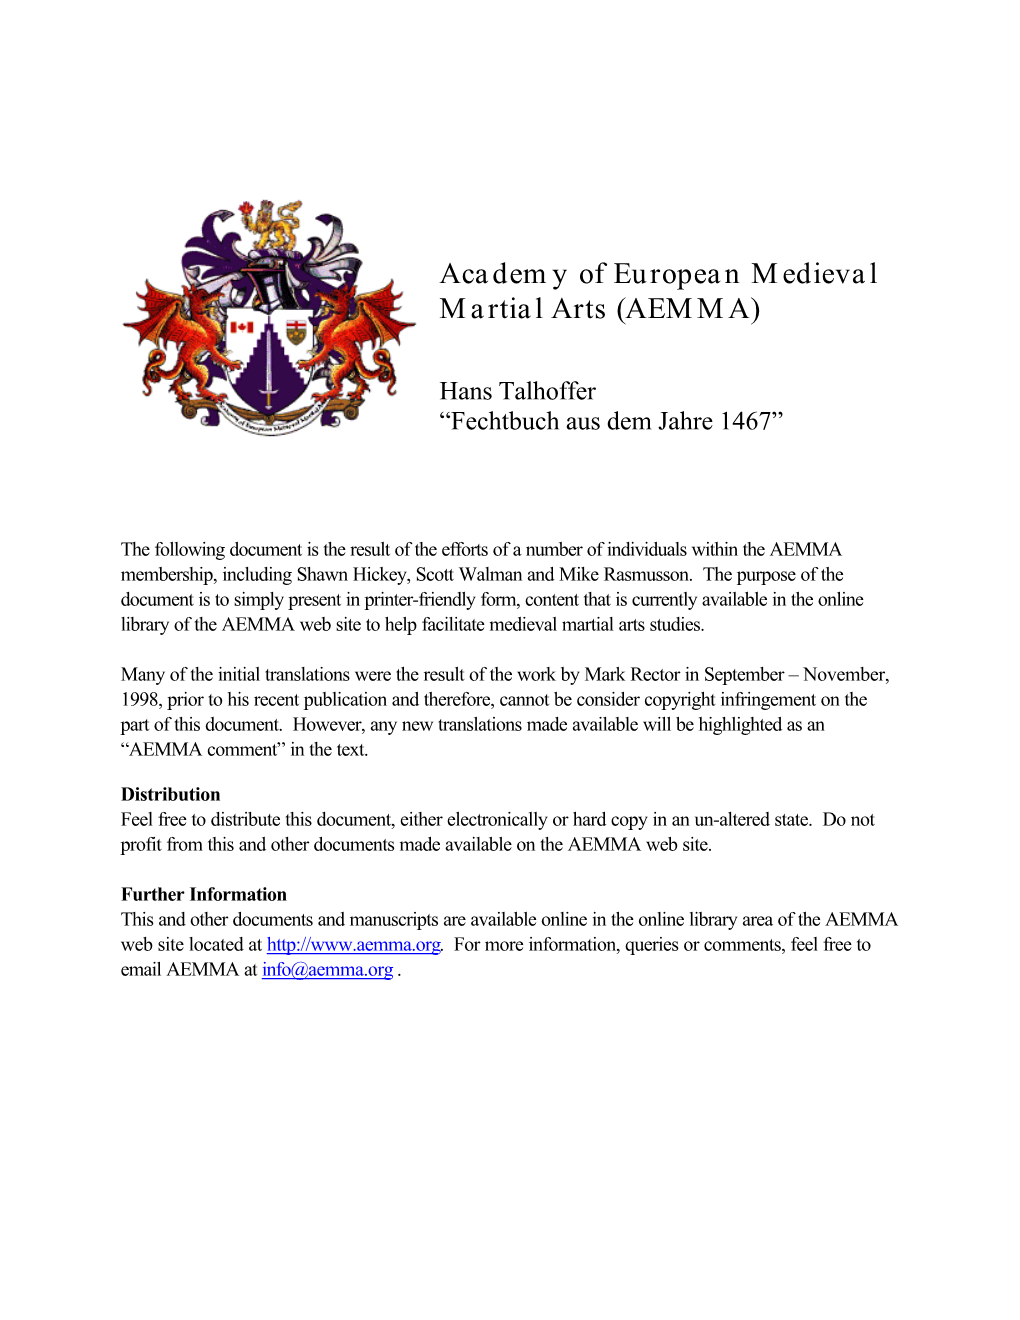 Academy of European Medieval Martial Arts (AEMMA)